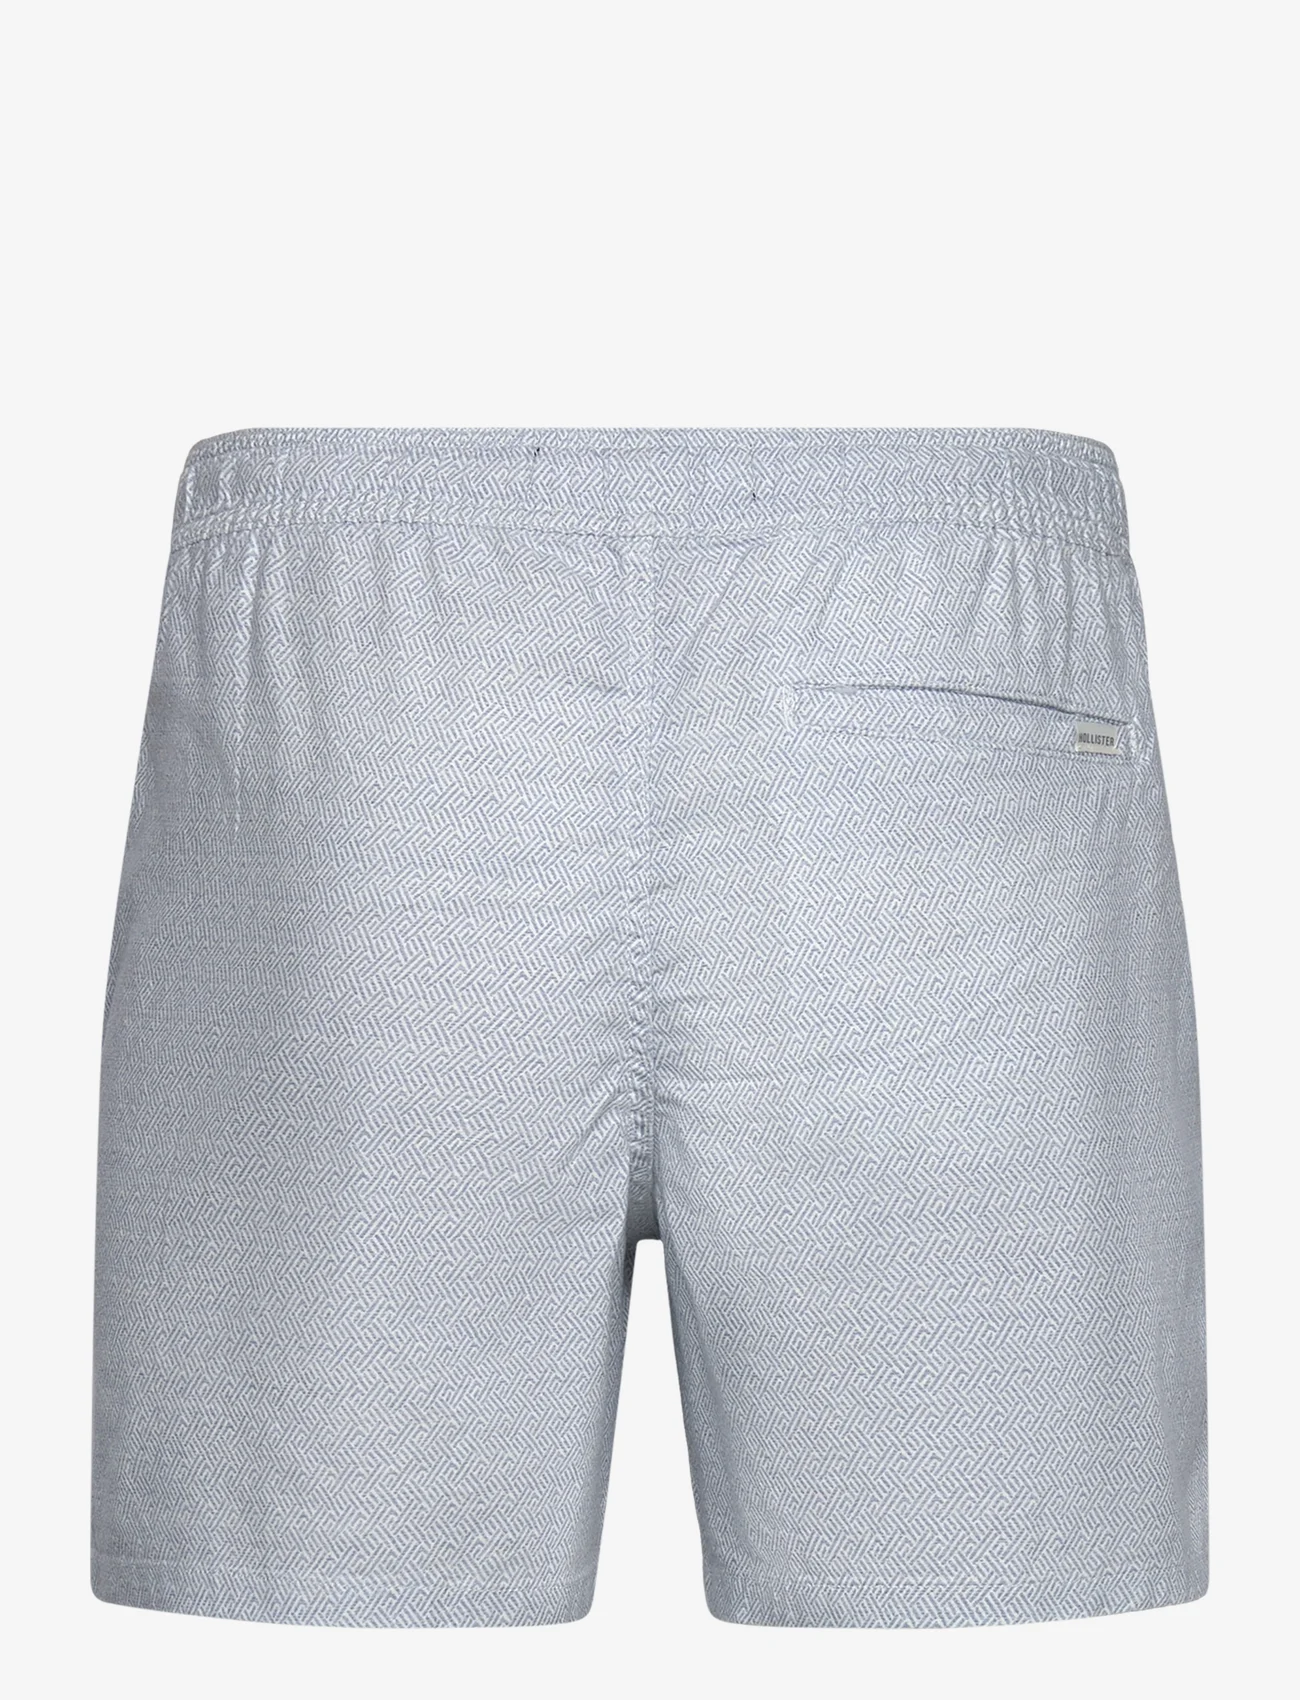 Hollister - HCo. GUYS SHORTS - chinos shorts - blue textural print - 1